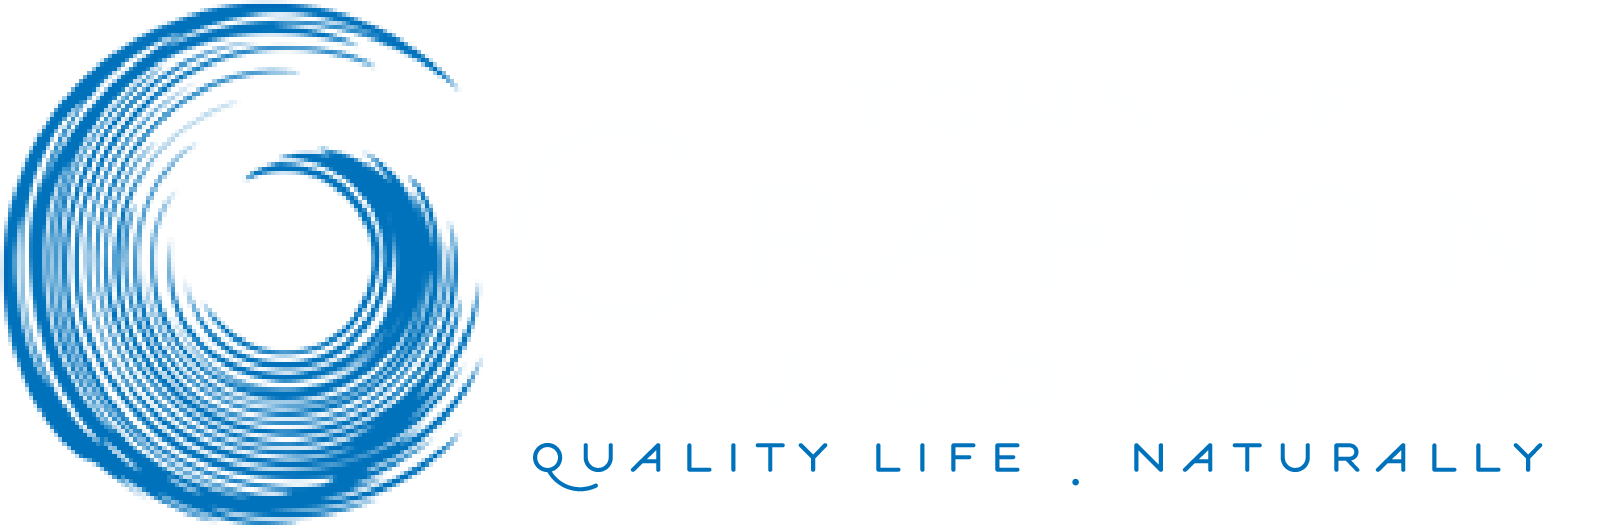 Town of Grafton, Wisconsin